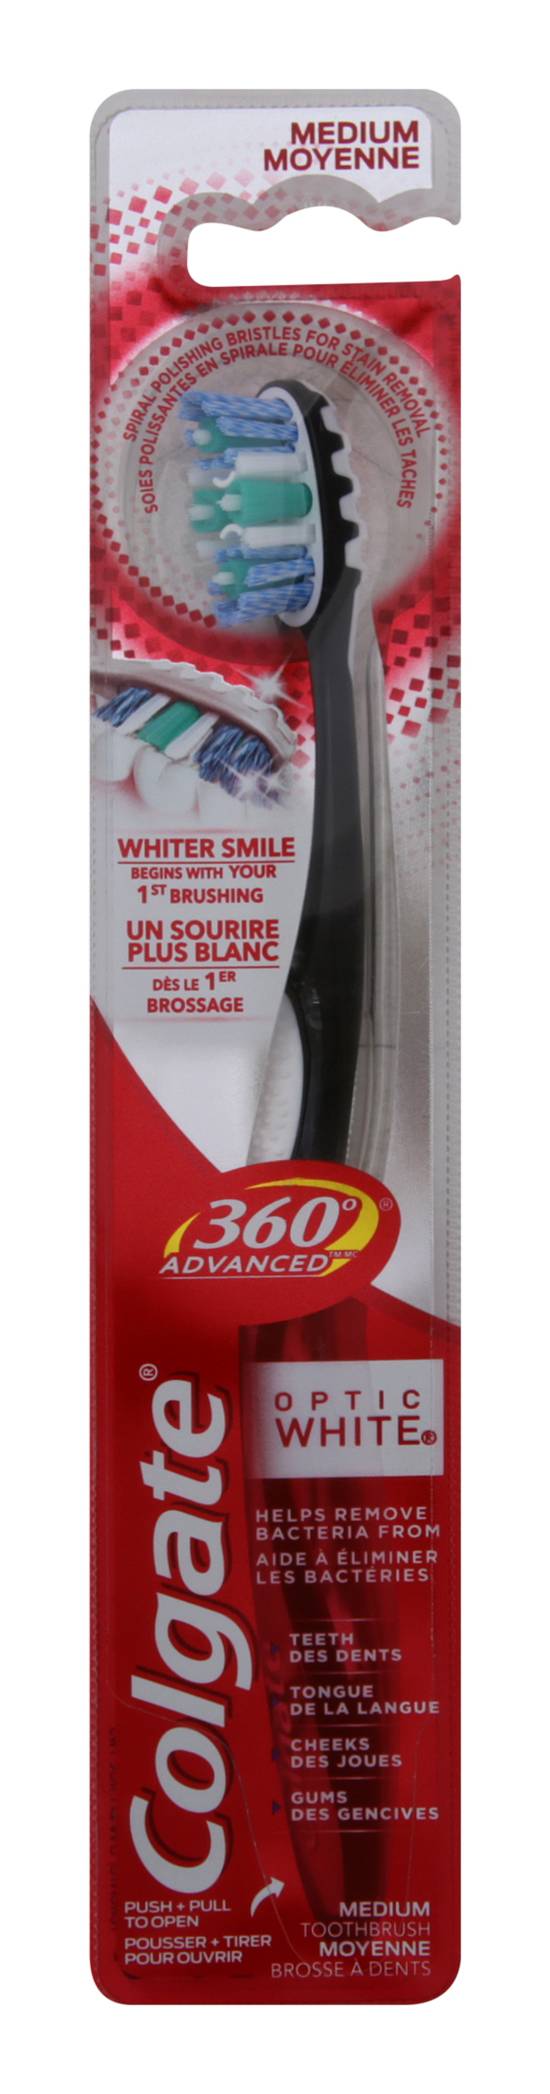 Colgate 360 Advanced Optic White Toothbrush Medium